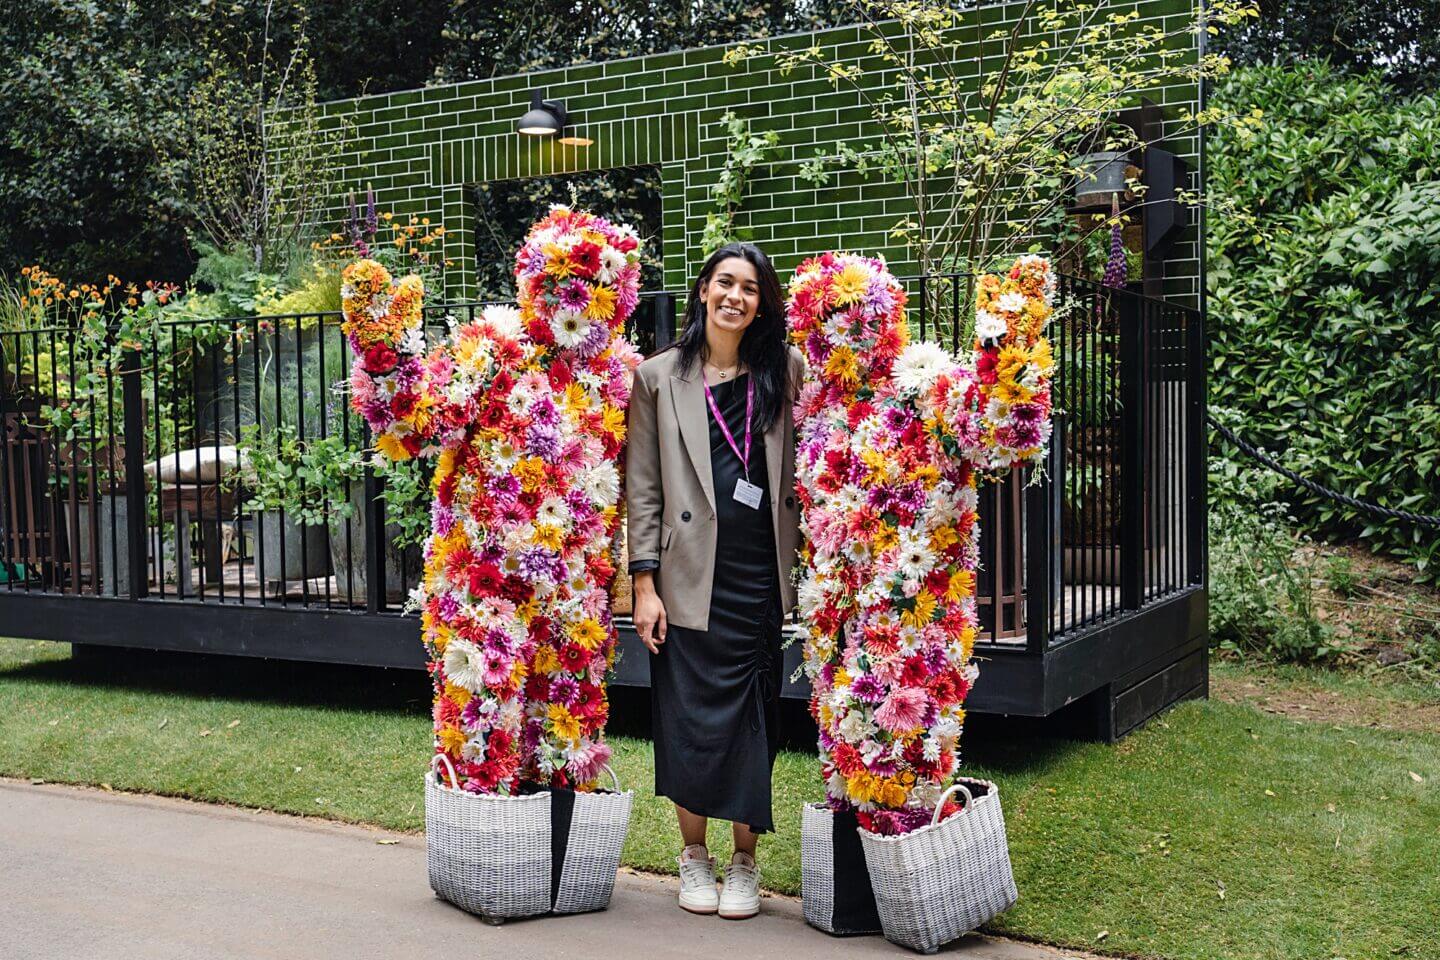 Emma Tamsin Tipping garden designer in front of her balcony garden at RHS Chelsea